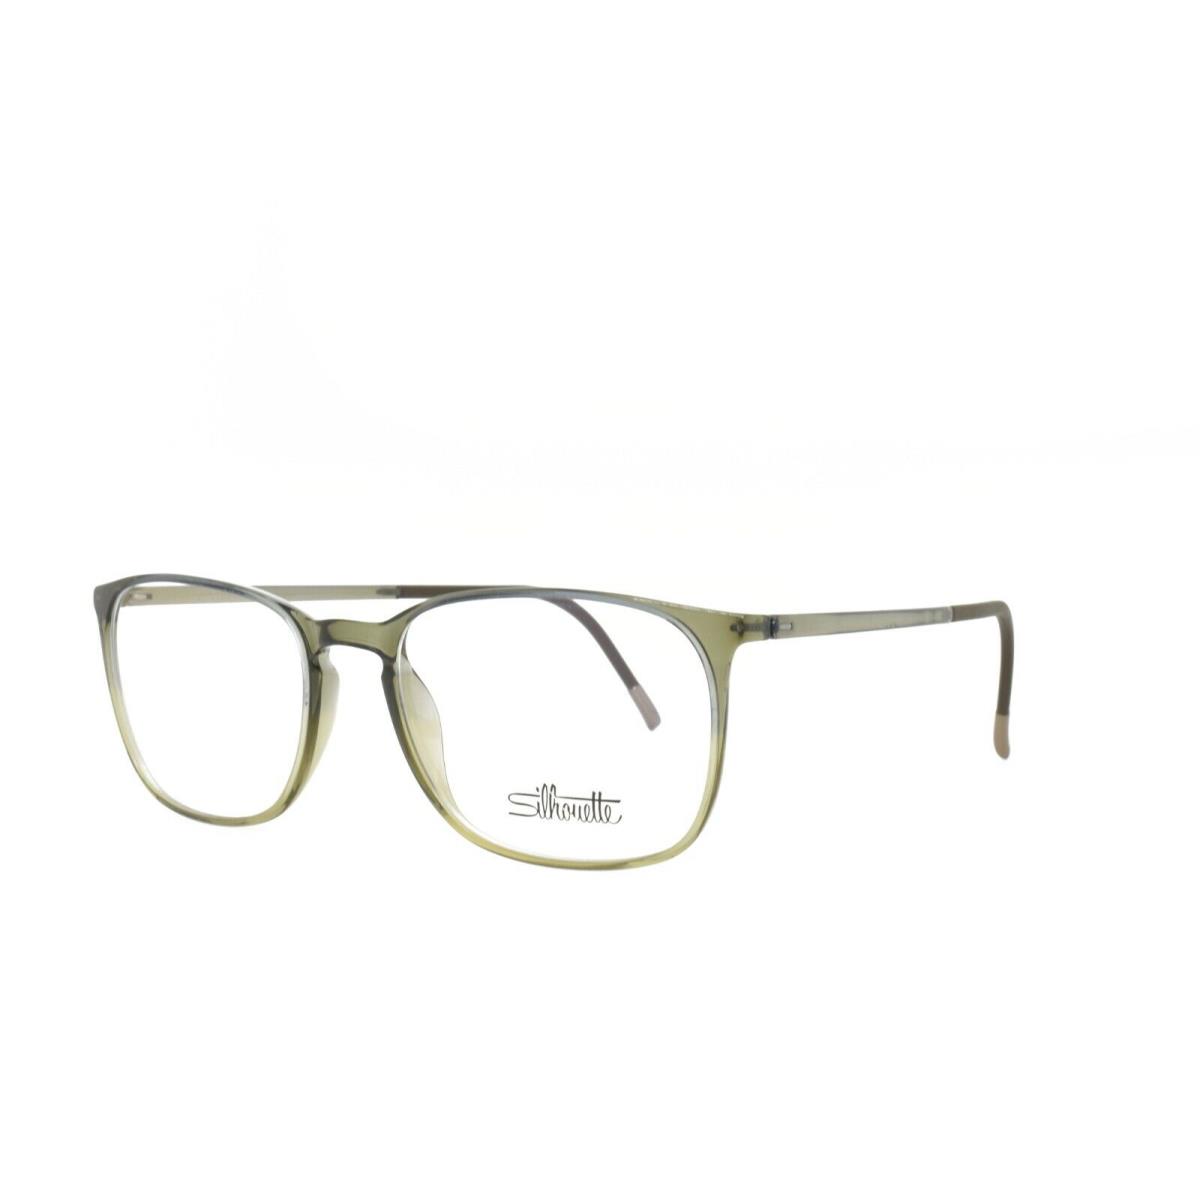 Silhouette Spx Illusion 2911 75 5510 Eyeglasses 53-18-145 Khaki Green - Green Frame